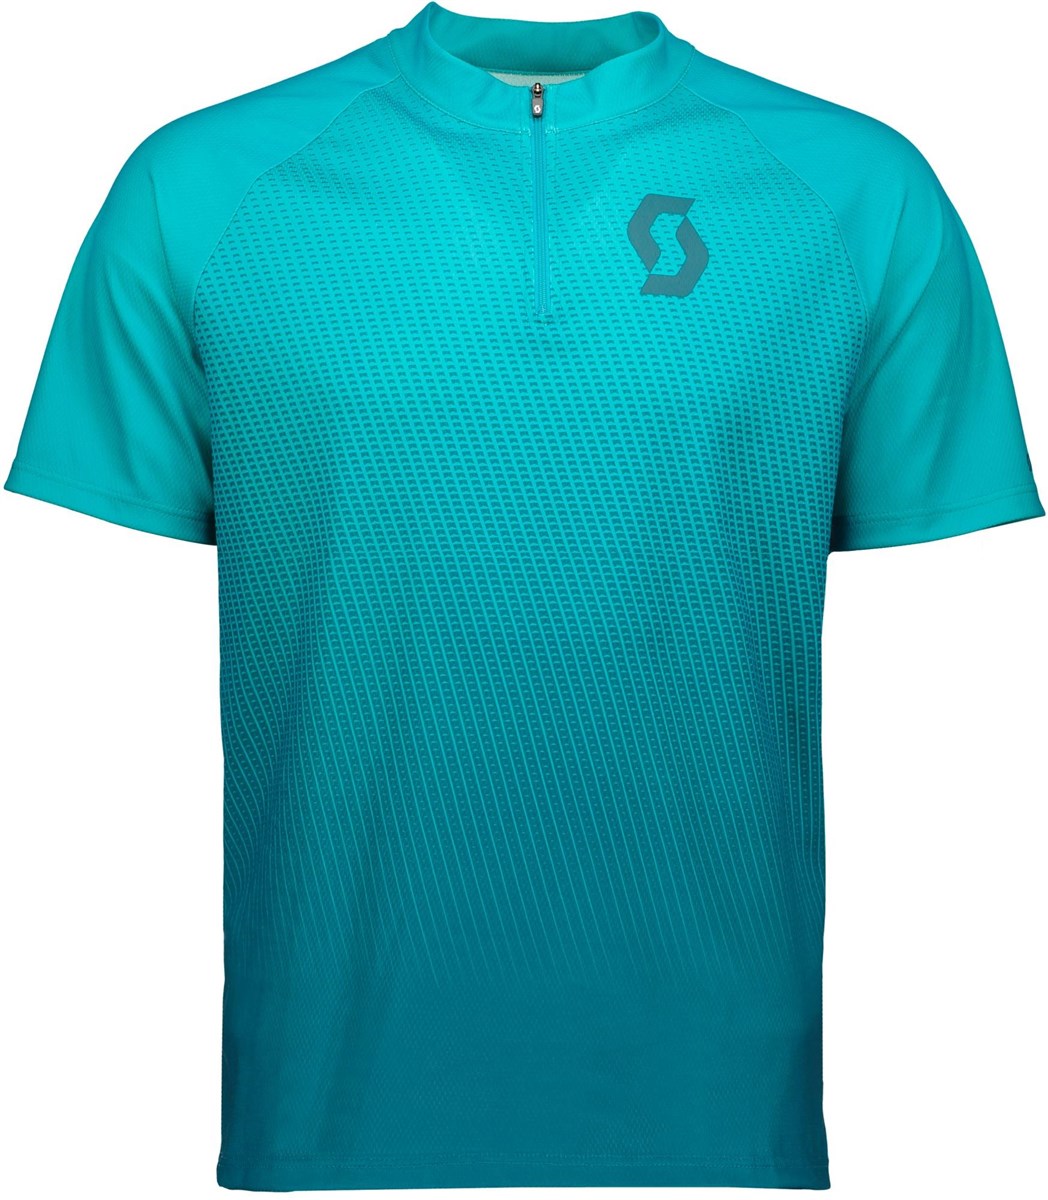 Scott Trail 40 Short Sleeve Cycling Shirt / Jersey product image